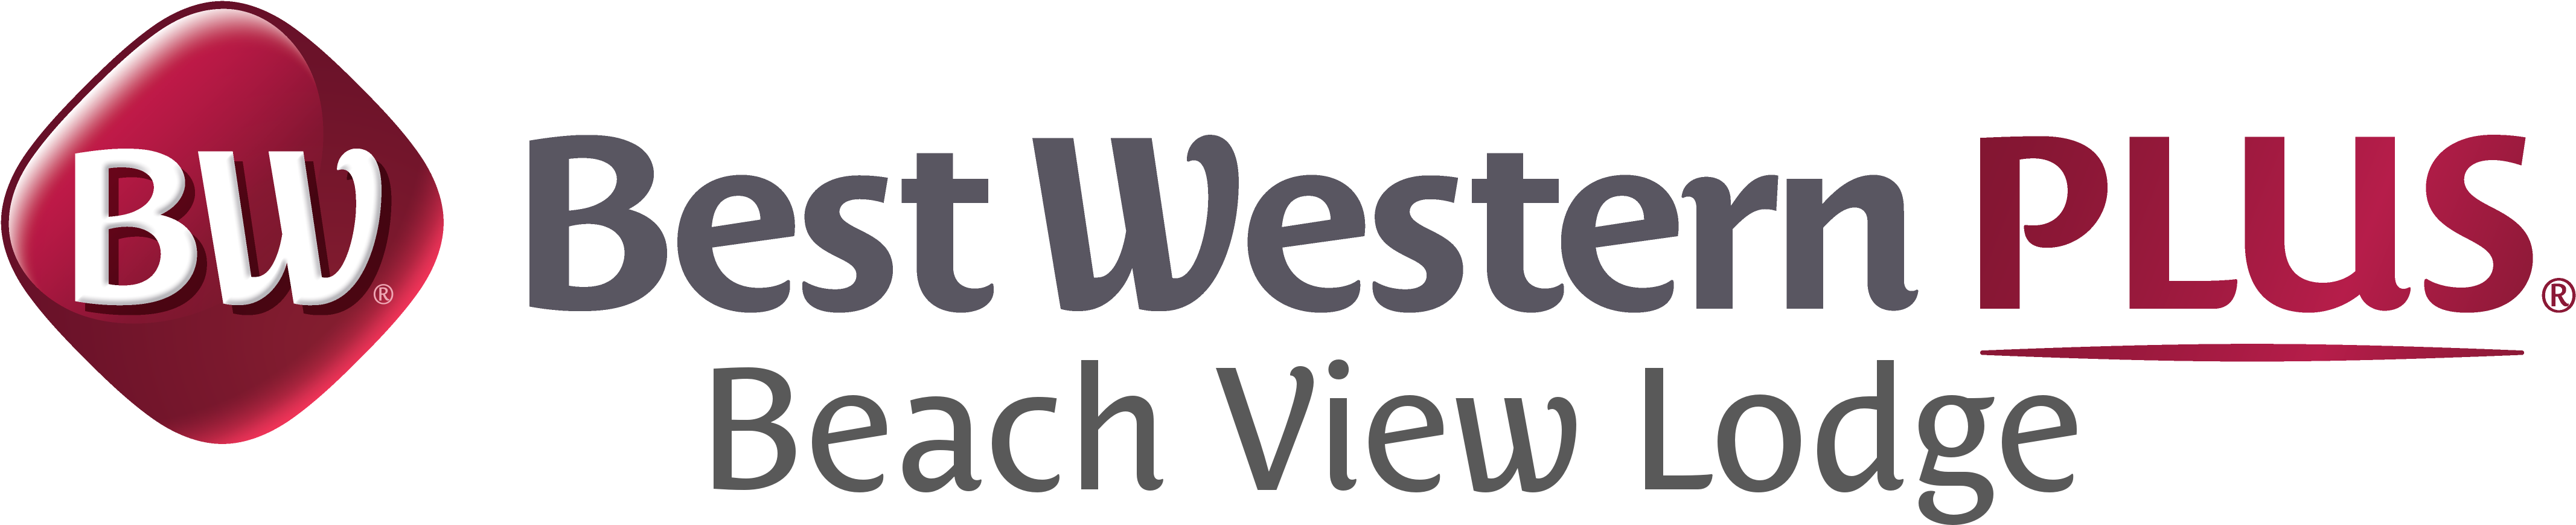 Best Western Plus - Logo Best Western Plus (4453x990), Png Download